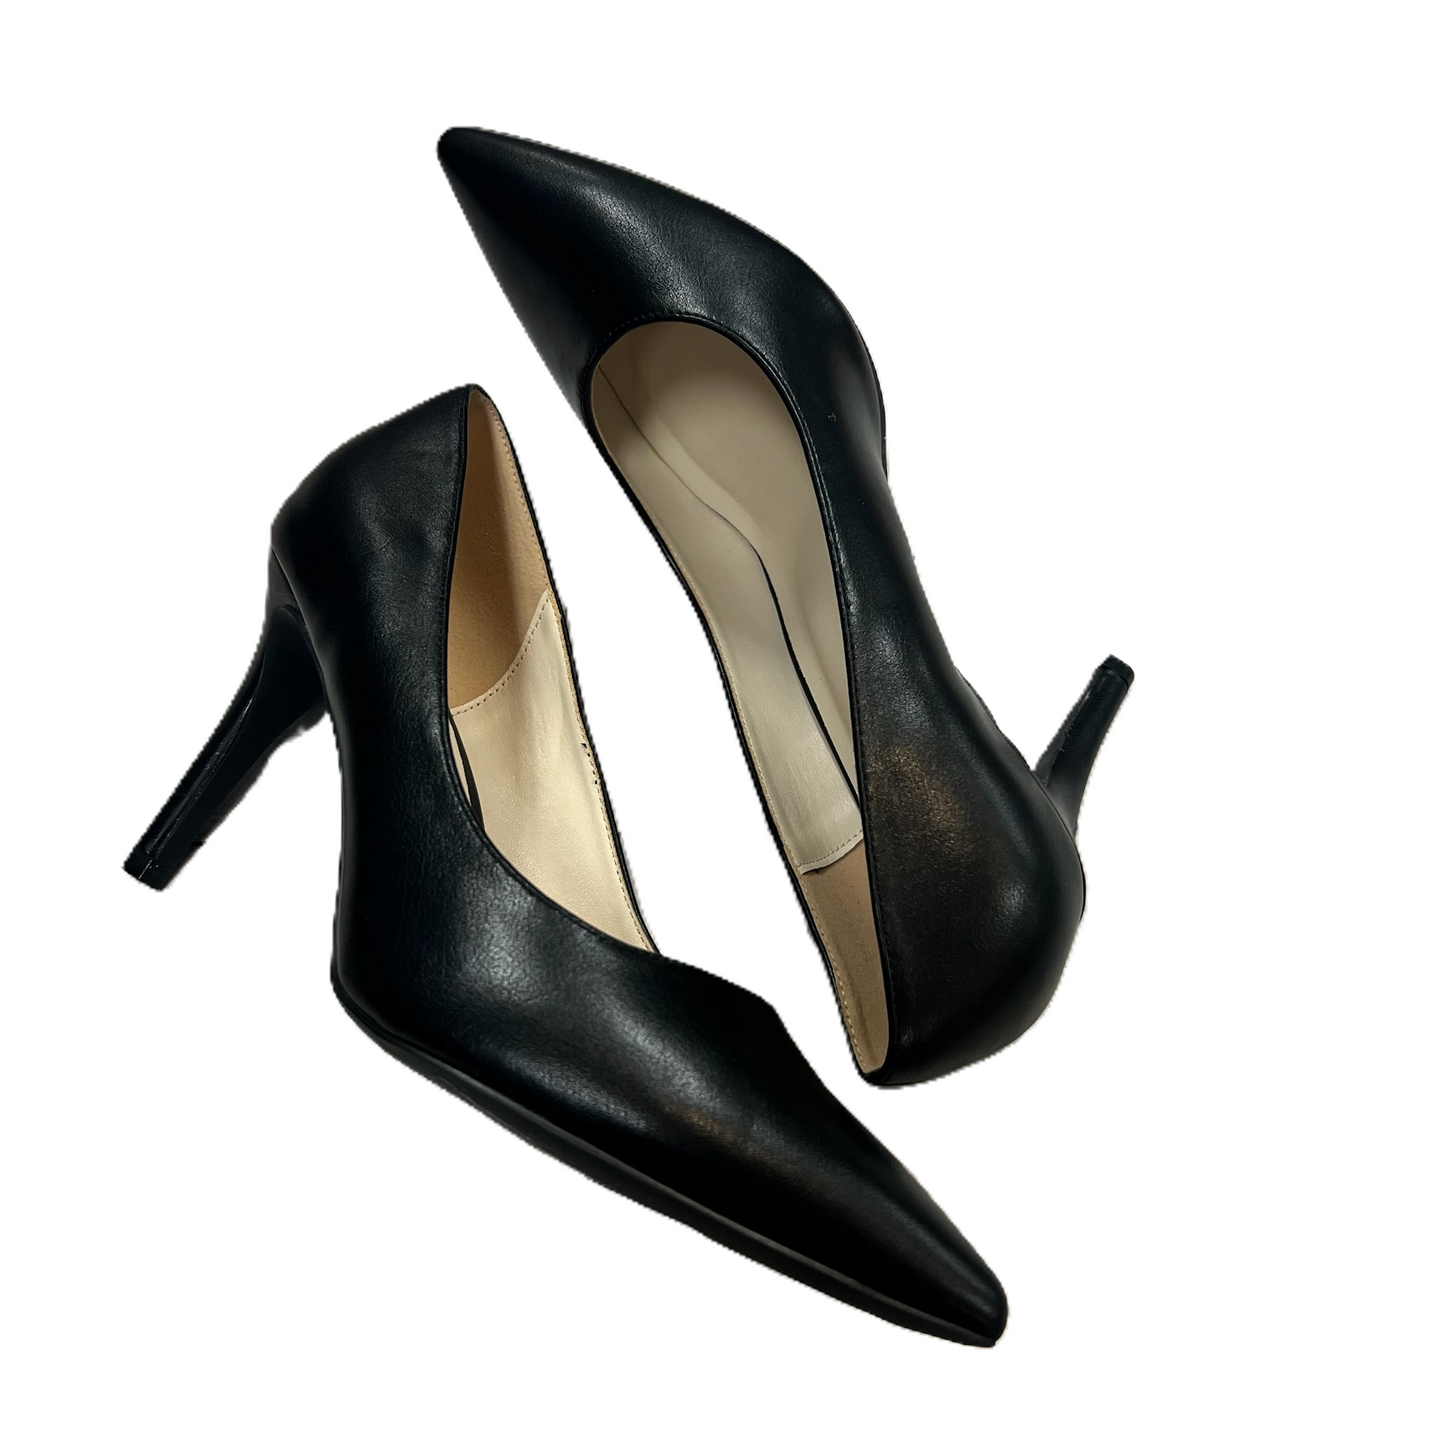 Black Shoes Heels Stiletto By Halston, Size: 9